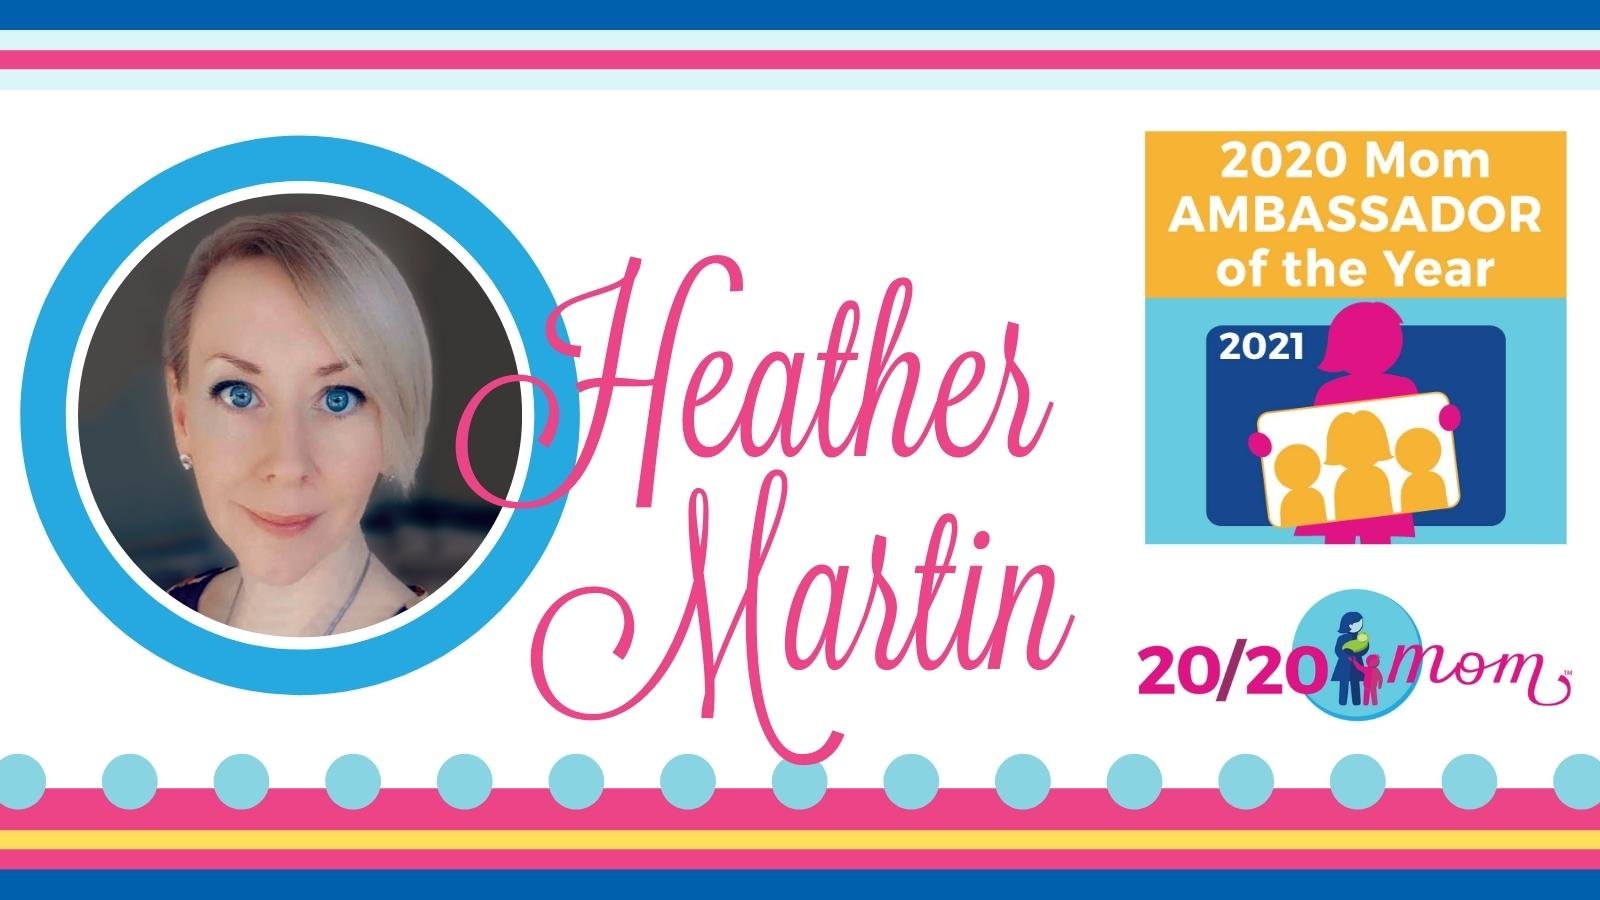 Heather Martin2020 Mom Ambassador of the Year